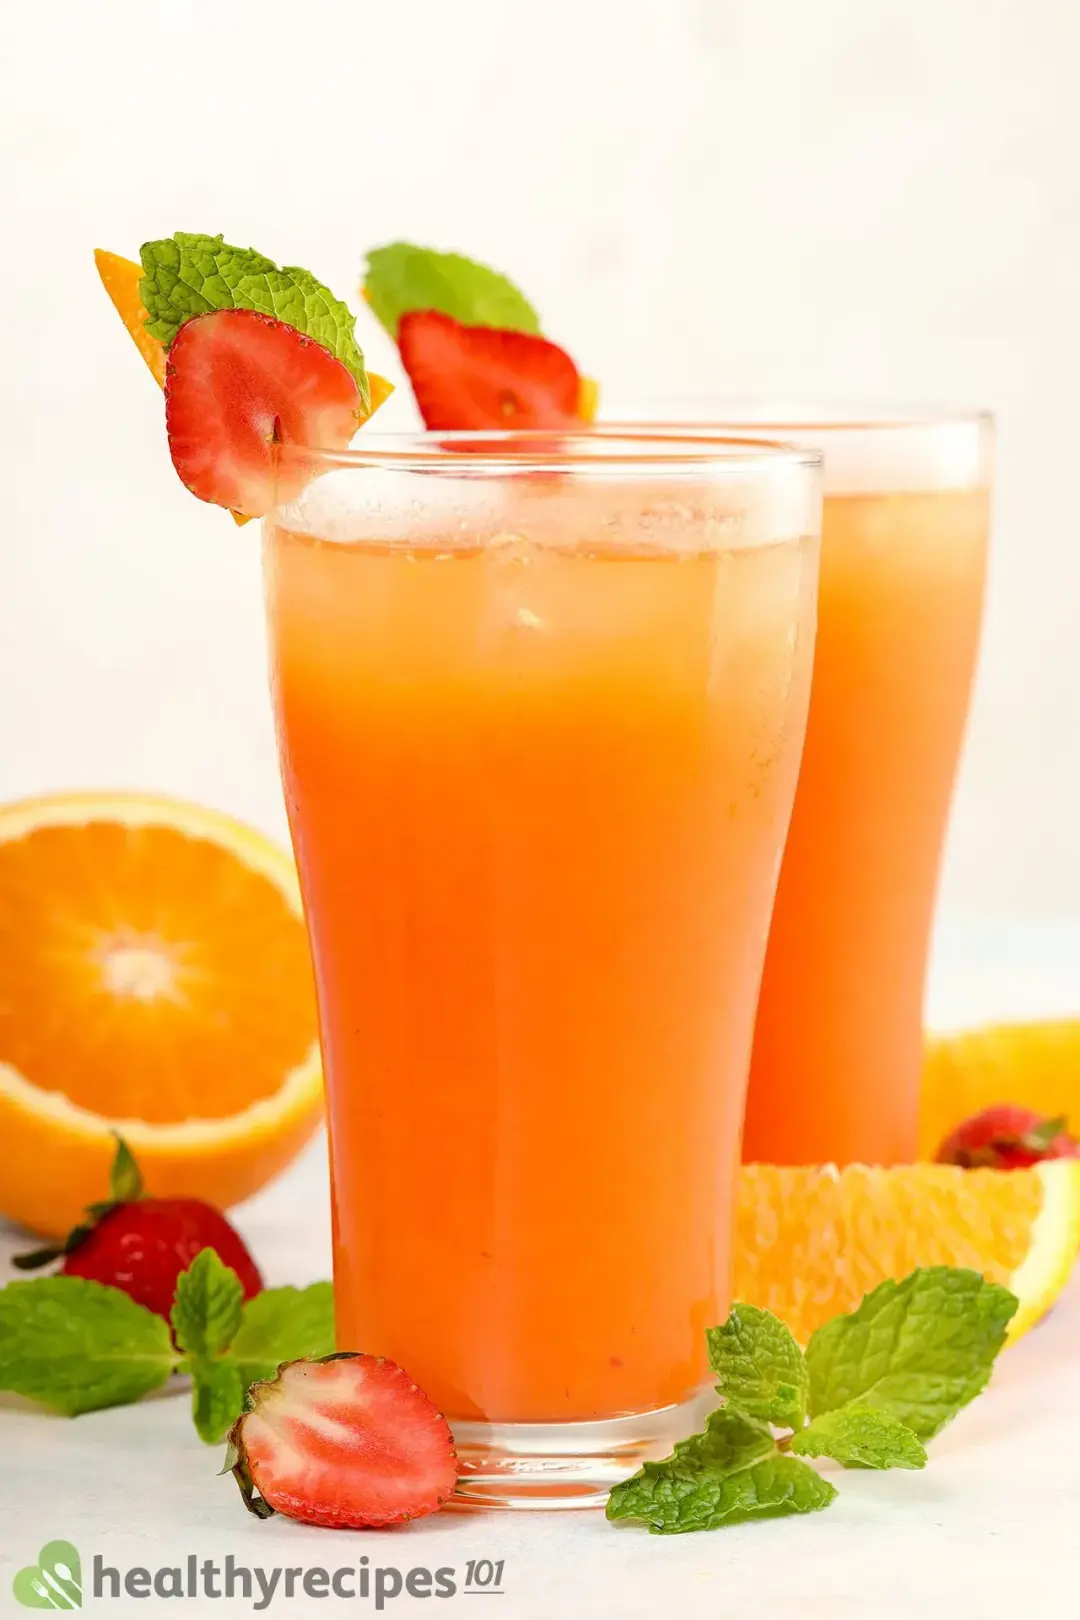 Is This Strawberry Orange Juice Recipe Healthy